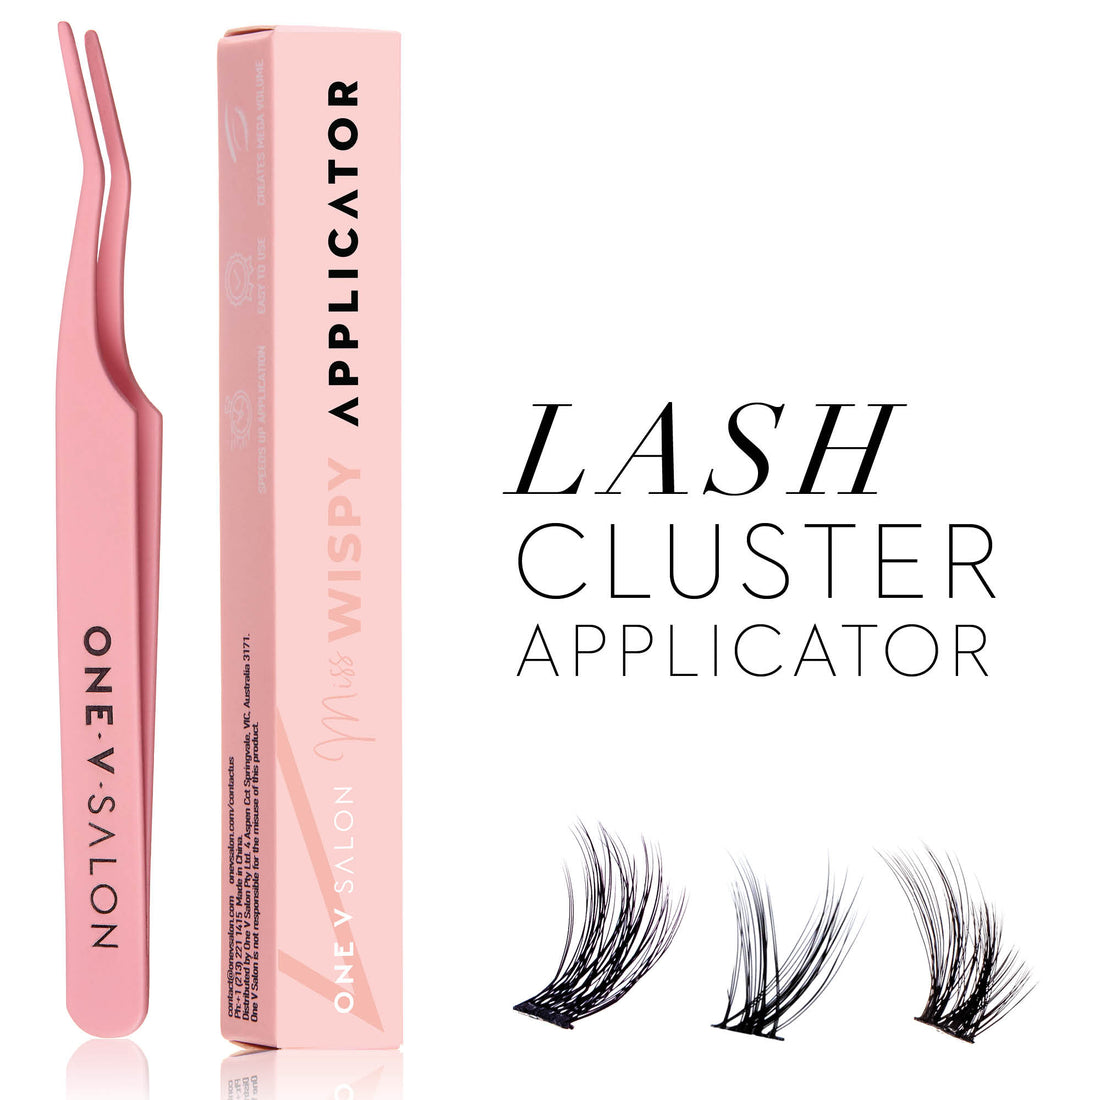 Miss Wispy Cluster Lashes - Applicator Tweezer . - One V Salon